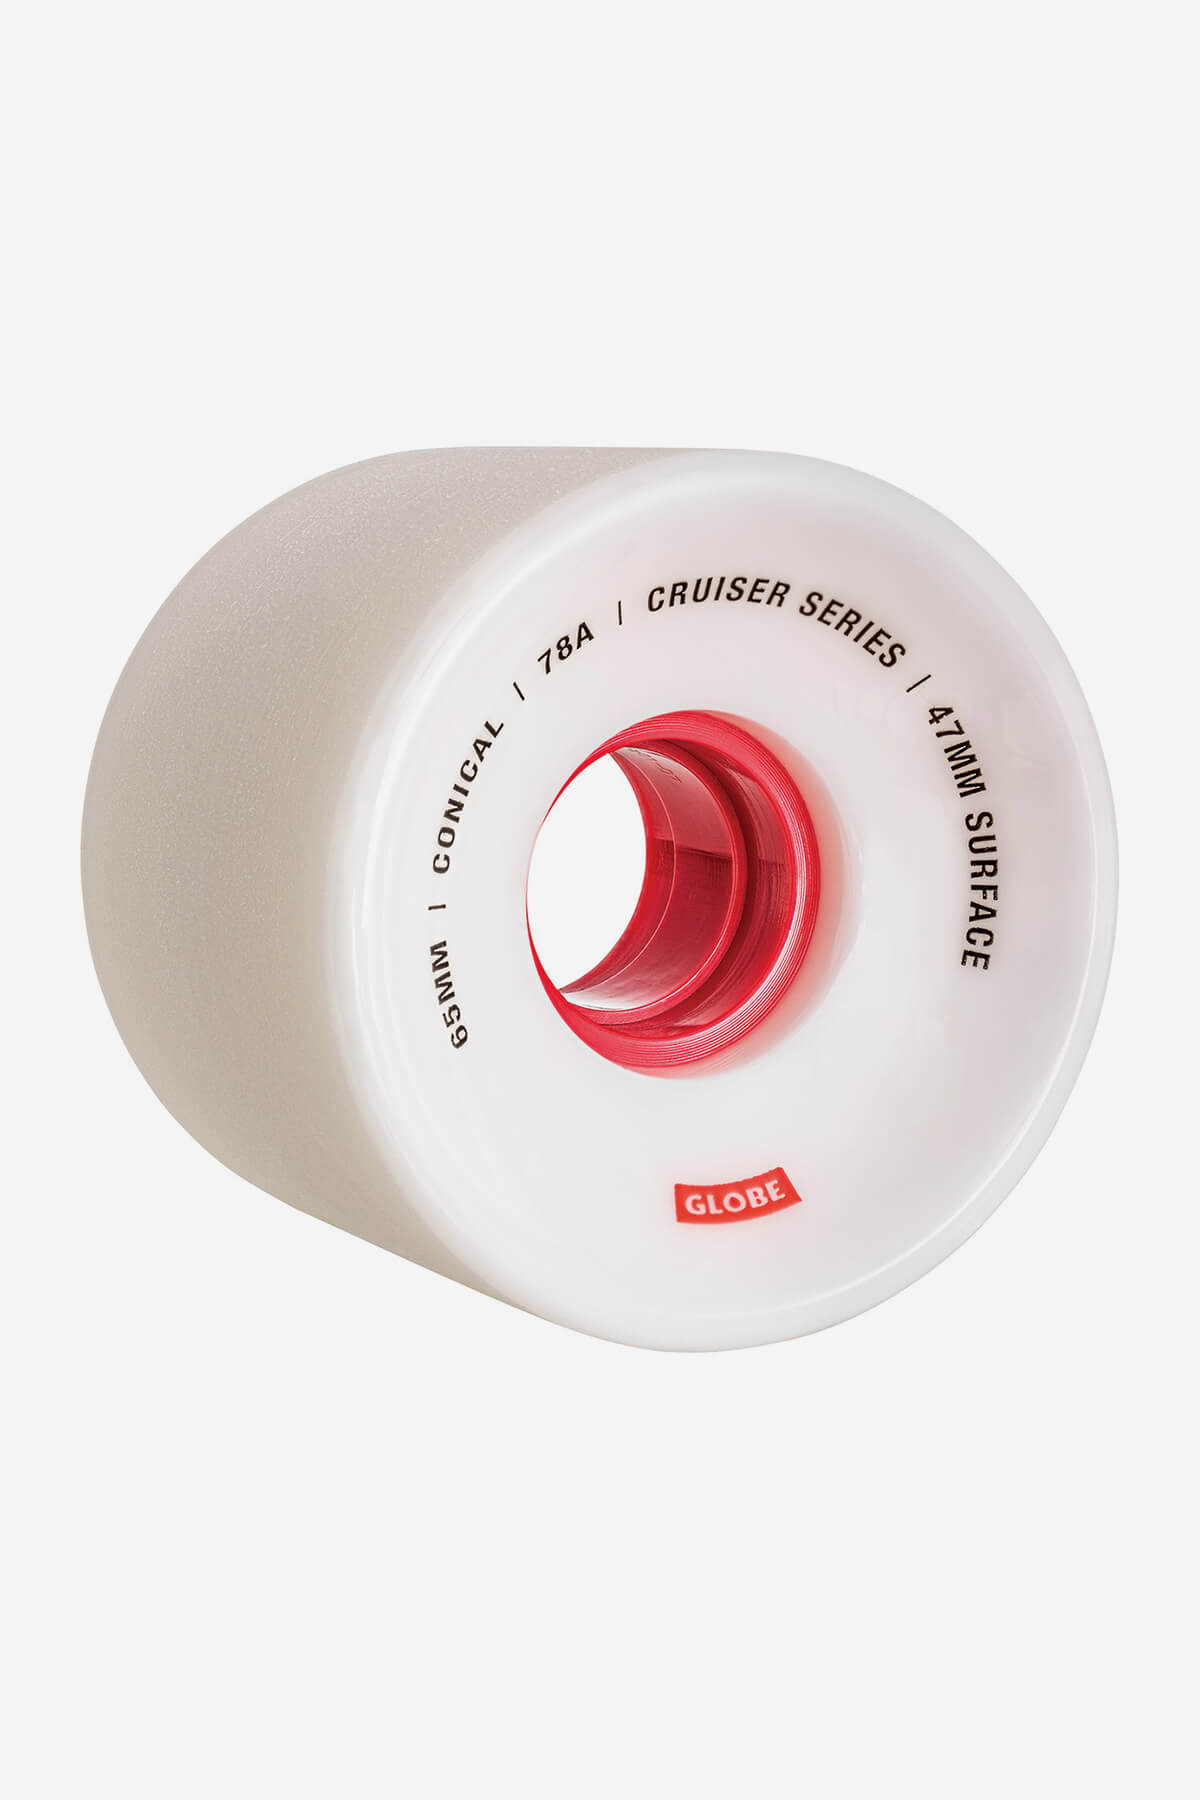 Globe Wheels Conical Cruiser Skateboard Wheel 65mm in White/Red/65